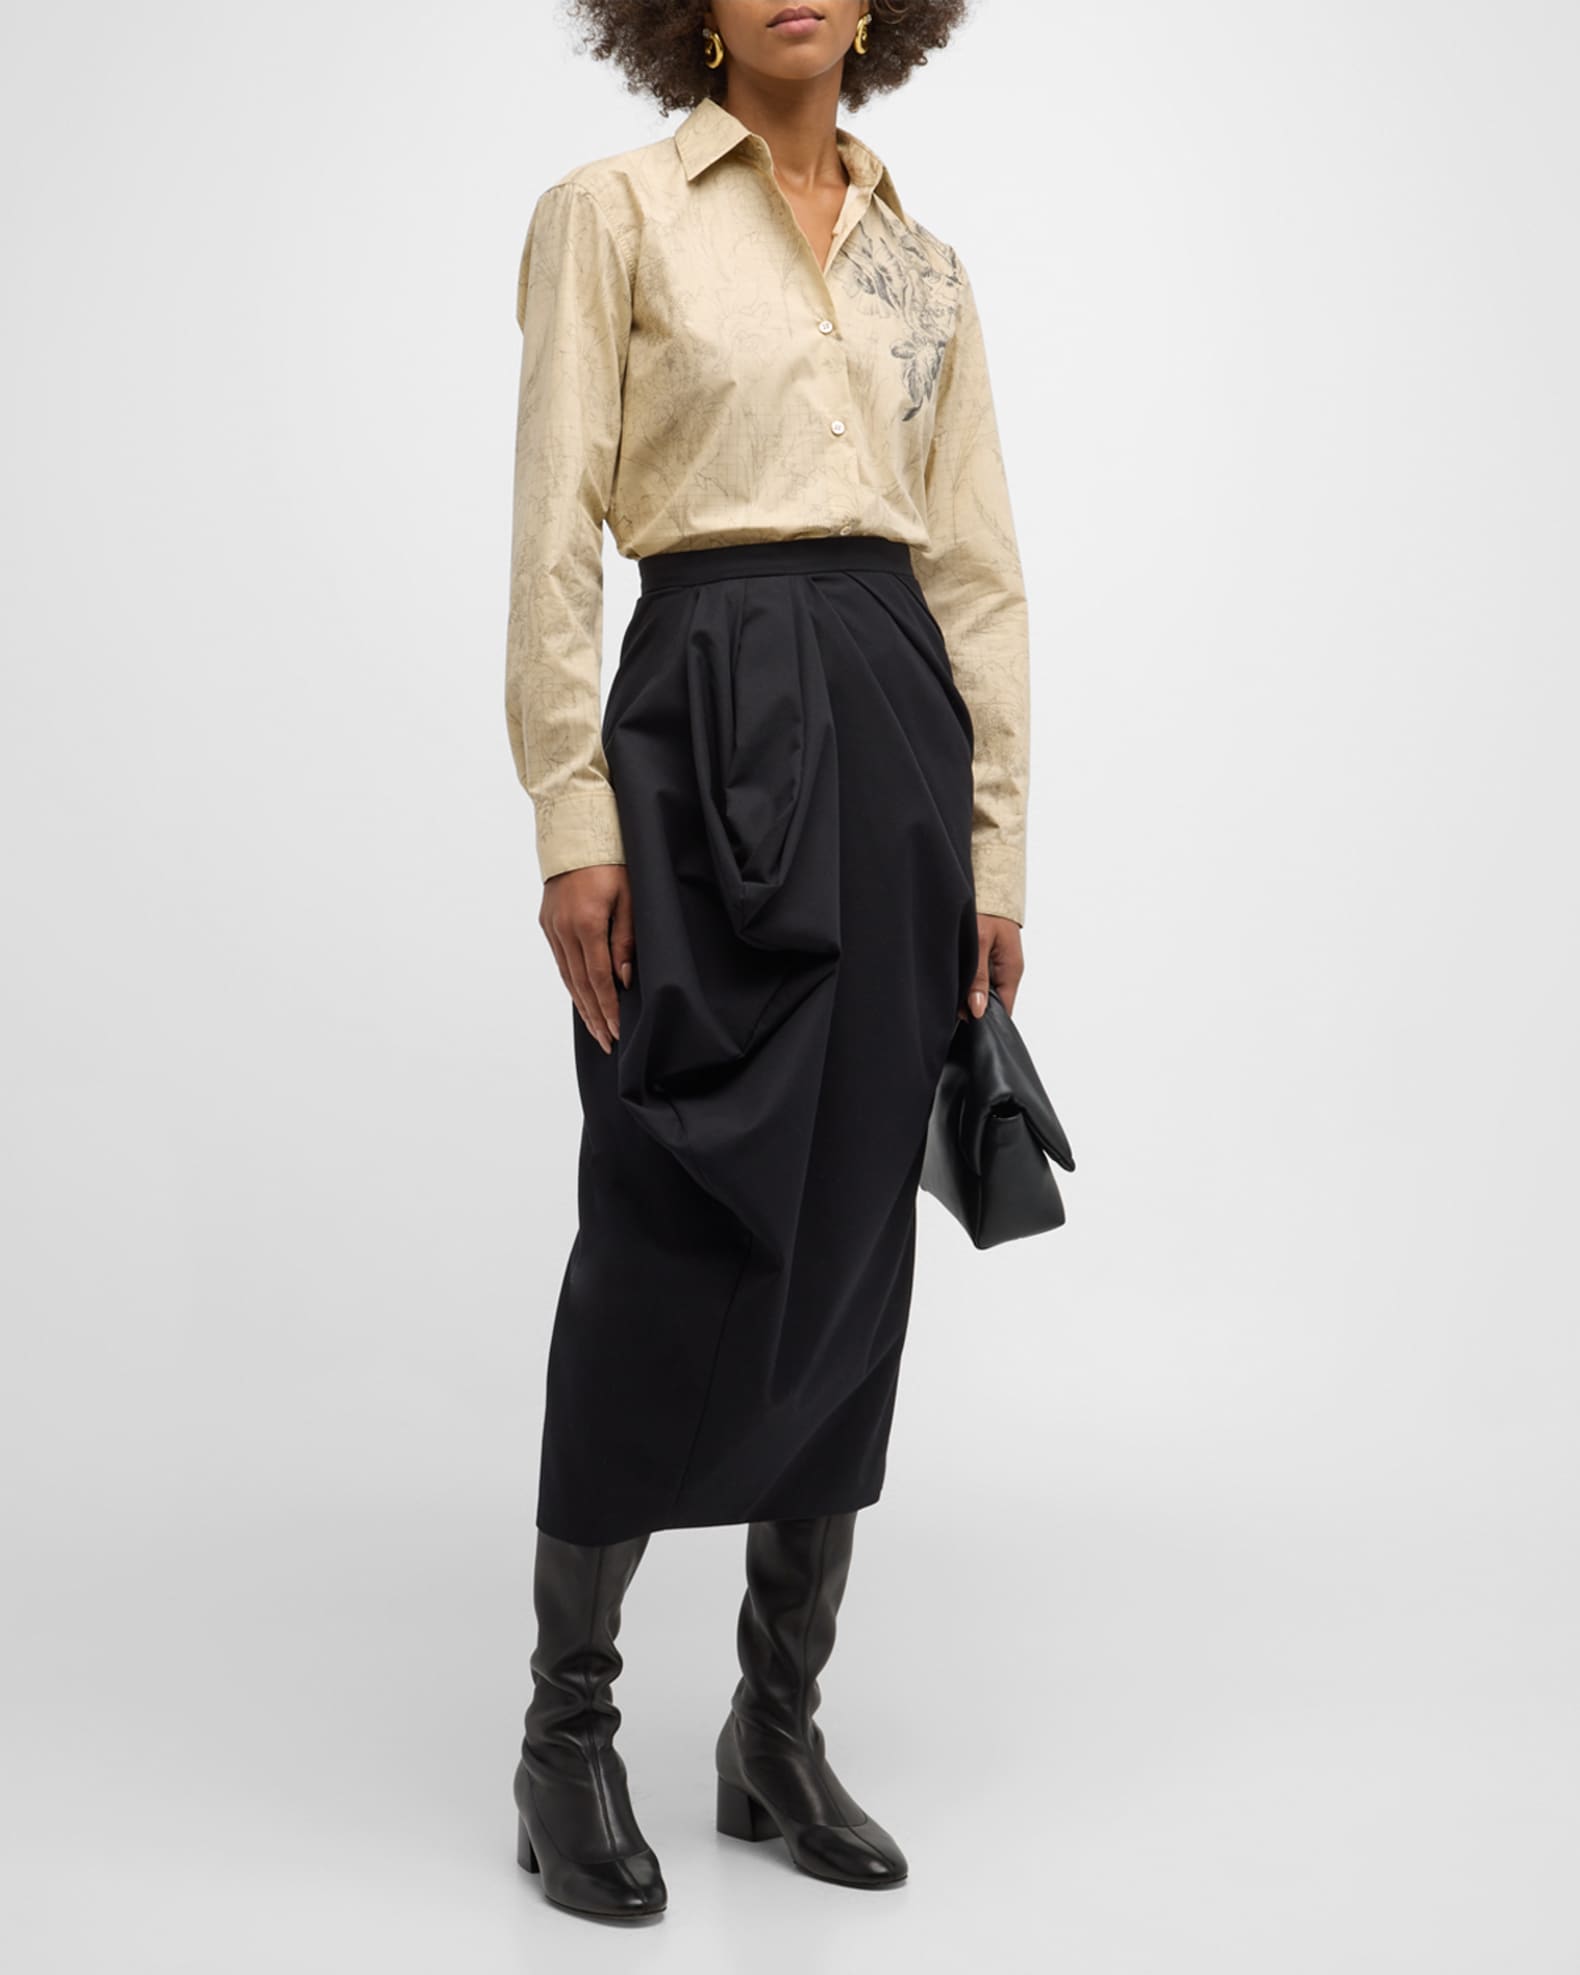 Dries Van Noten Clavelly Floral Button-Front Shirt | Neiman Marcus